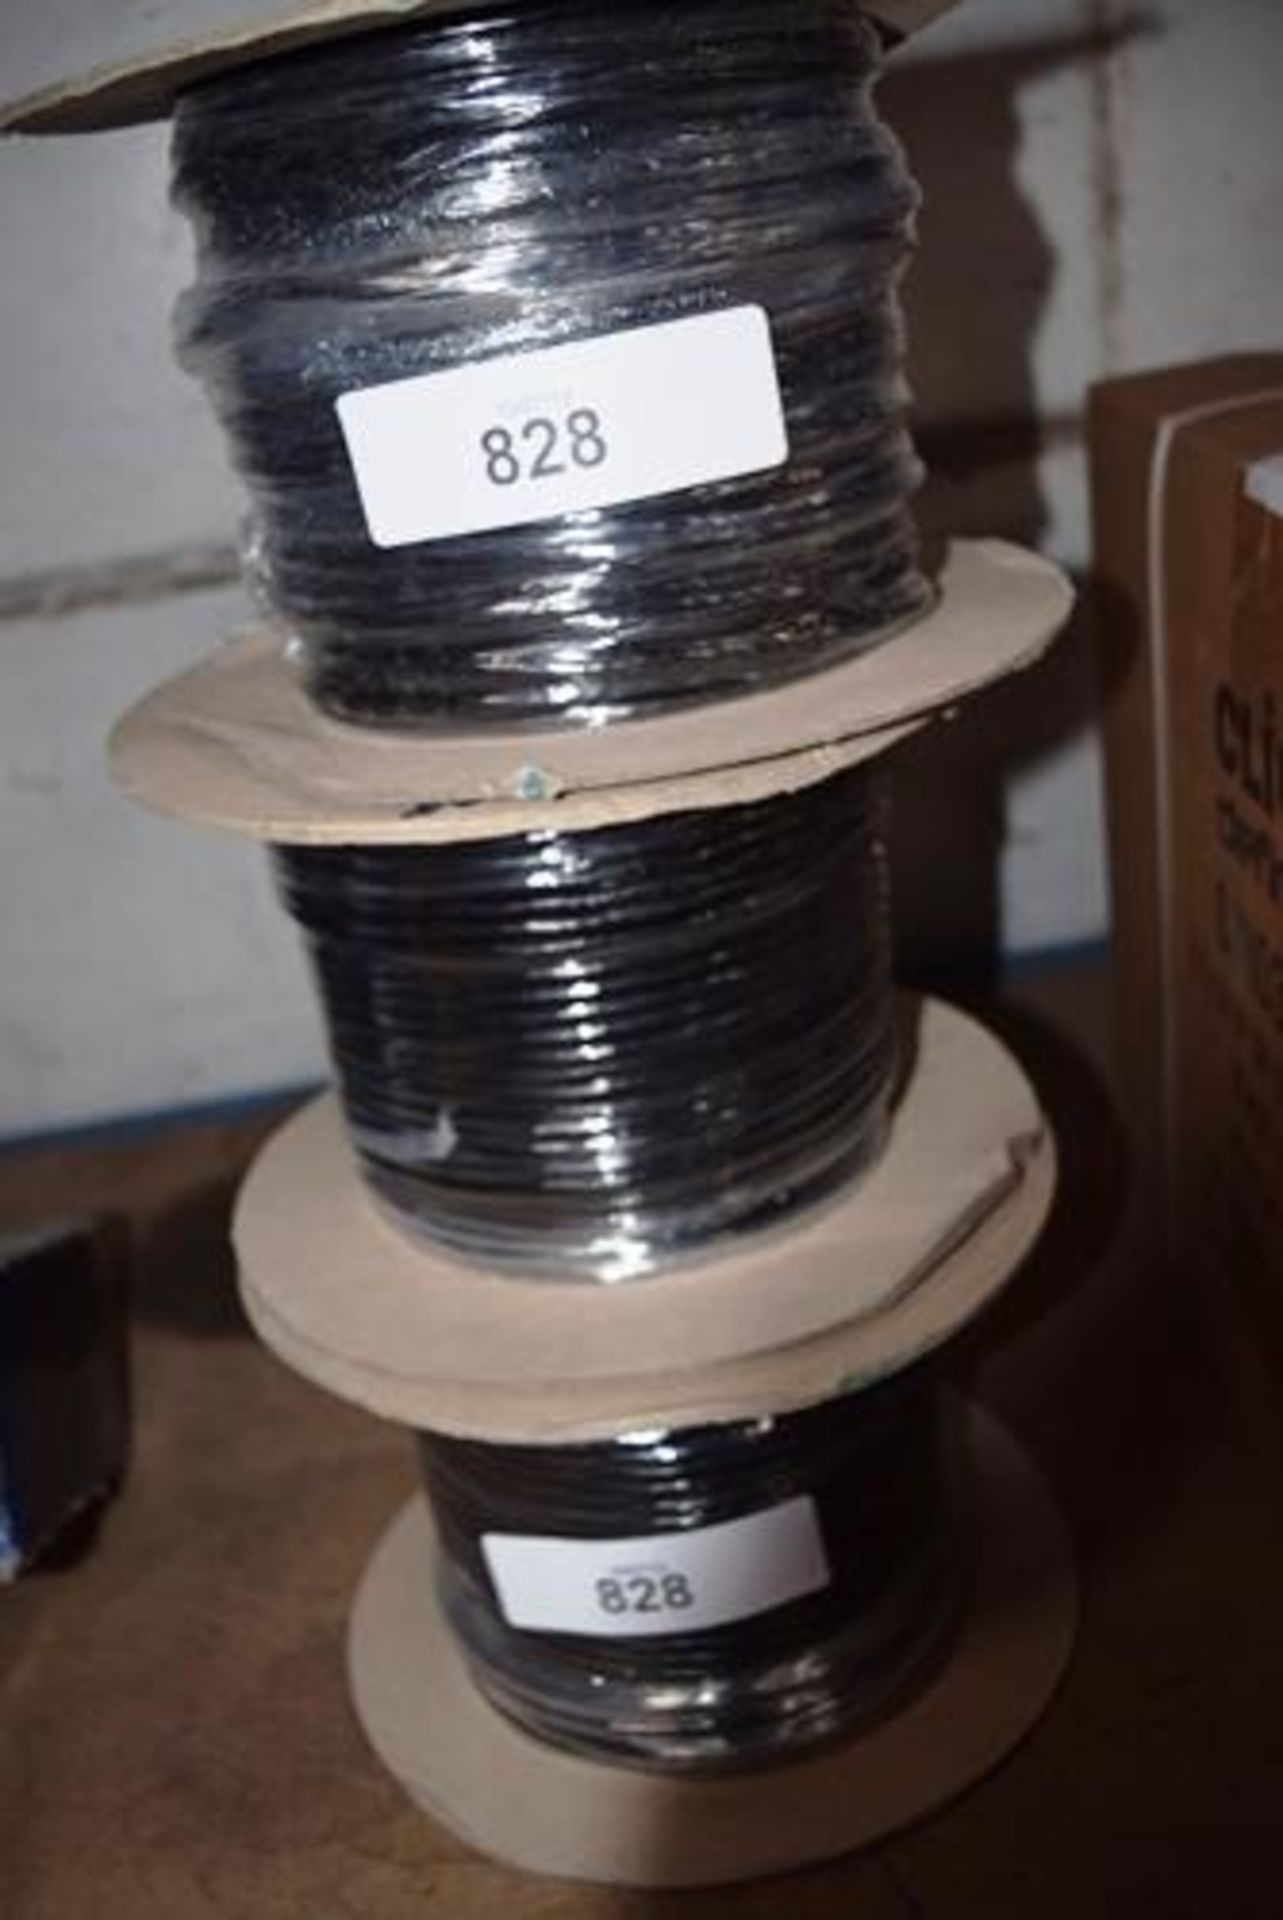 3 x 100m reels of Cat5PE wire